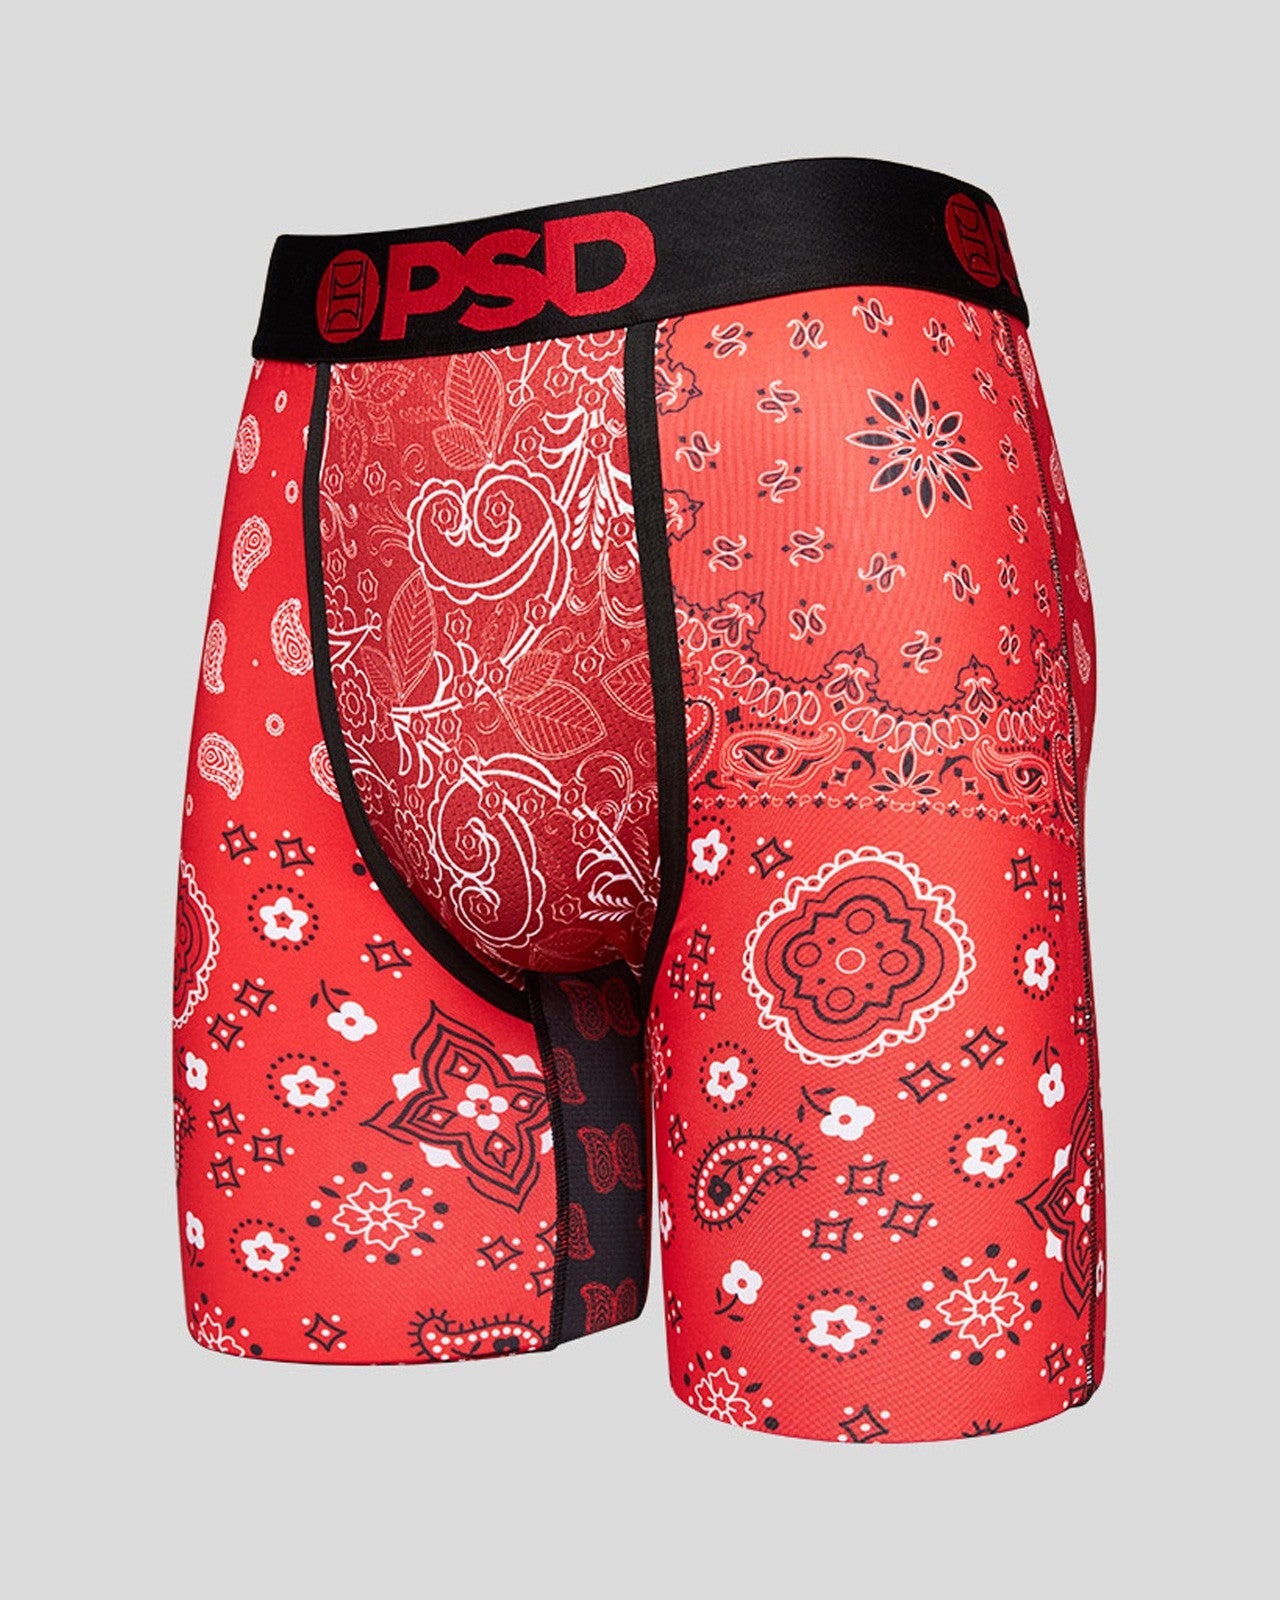 Download Hype Red Bandana Psd Underwear